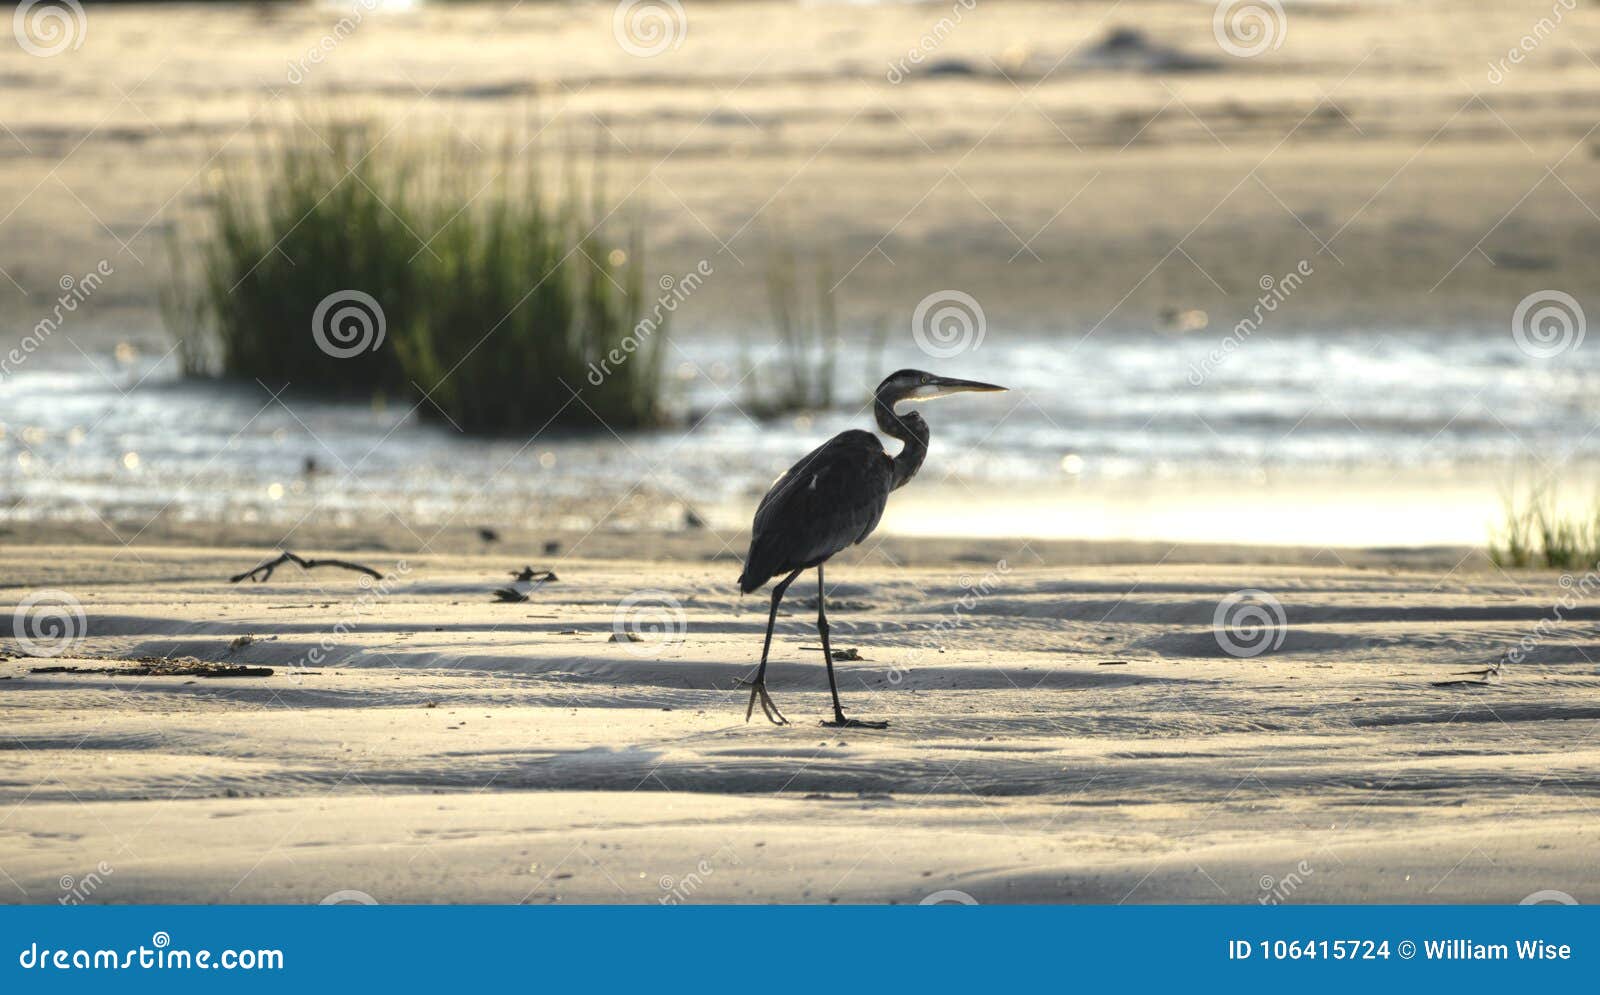 great blue heron silhouette on beach, hilton head island